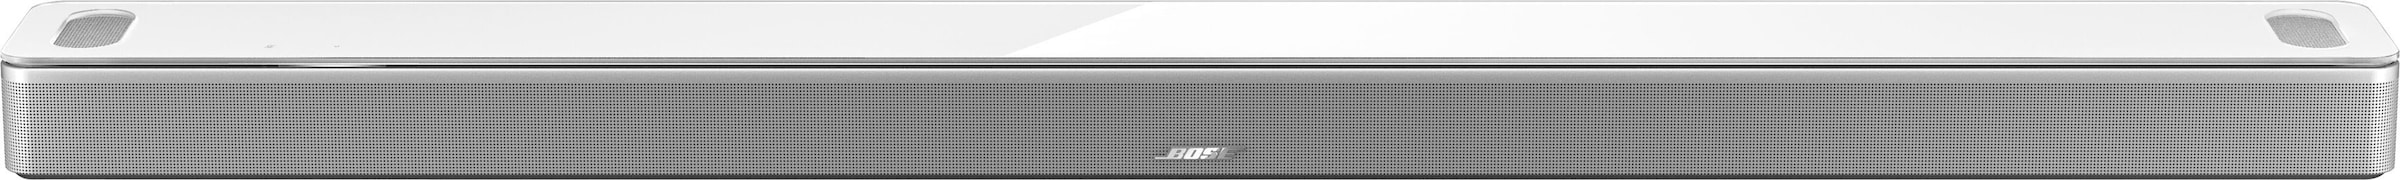 Bose Soundbar 900«, mit BAUR Soundbar »Smart Alexa Assistant Google und Amazon 